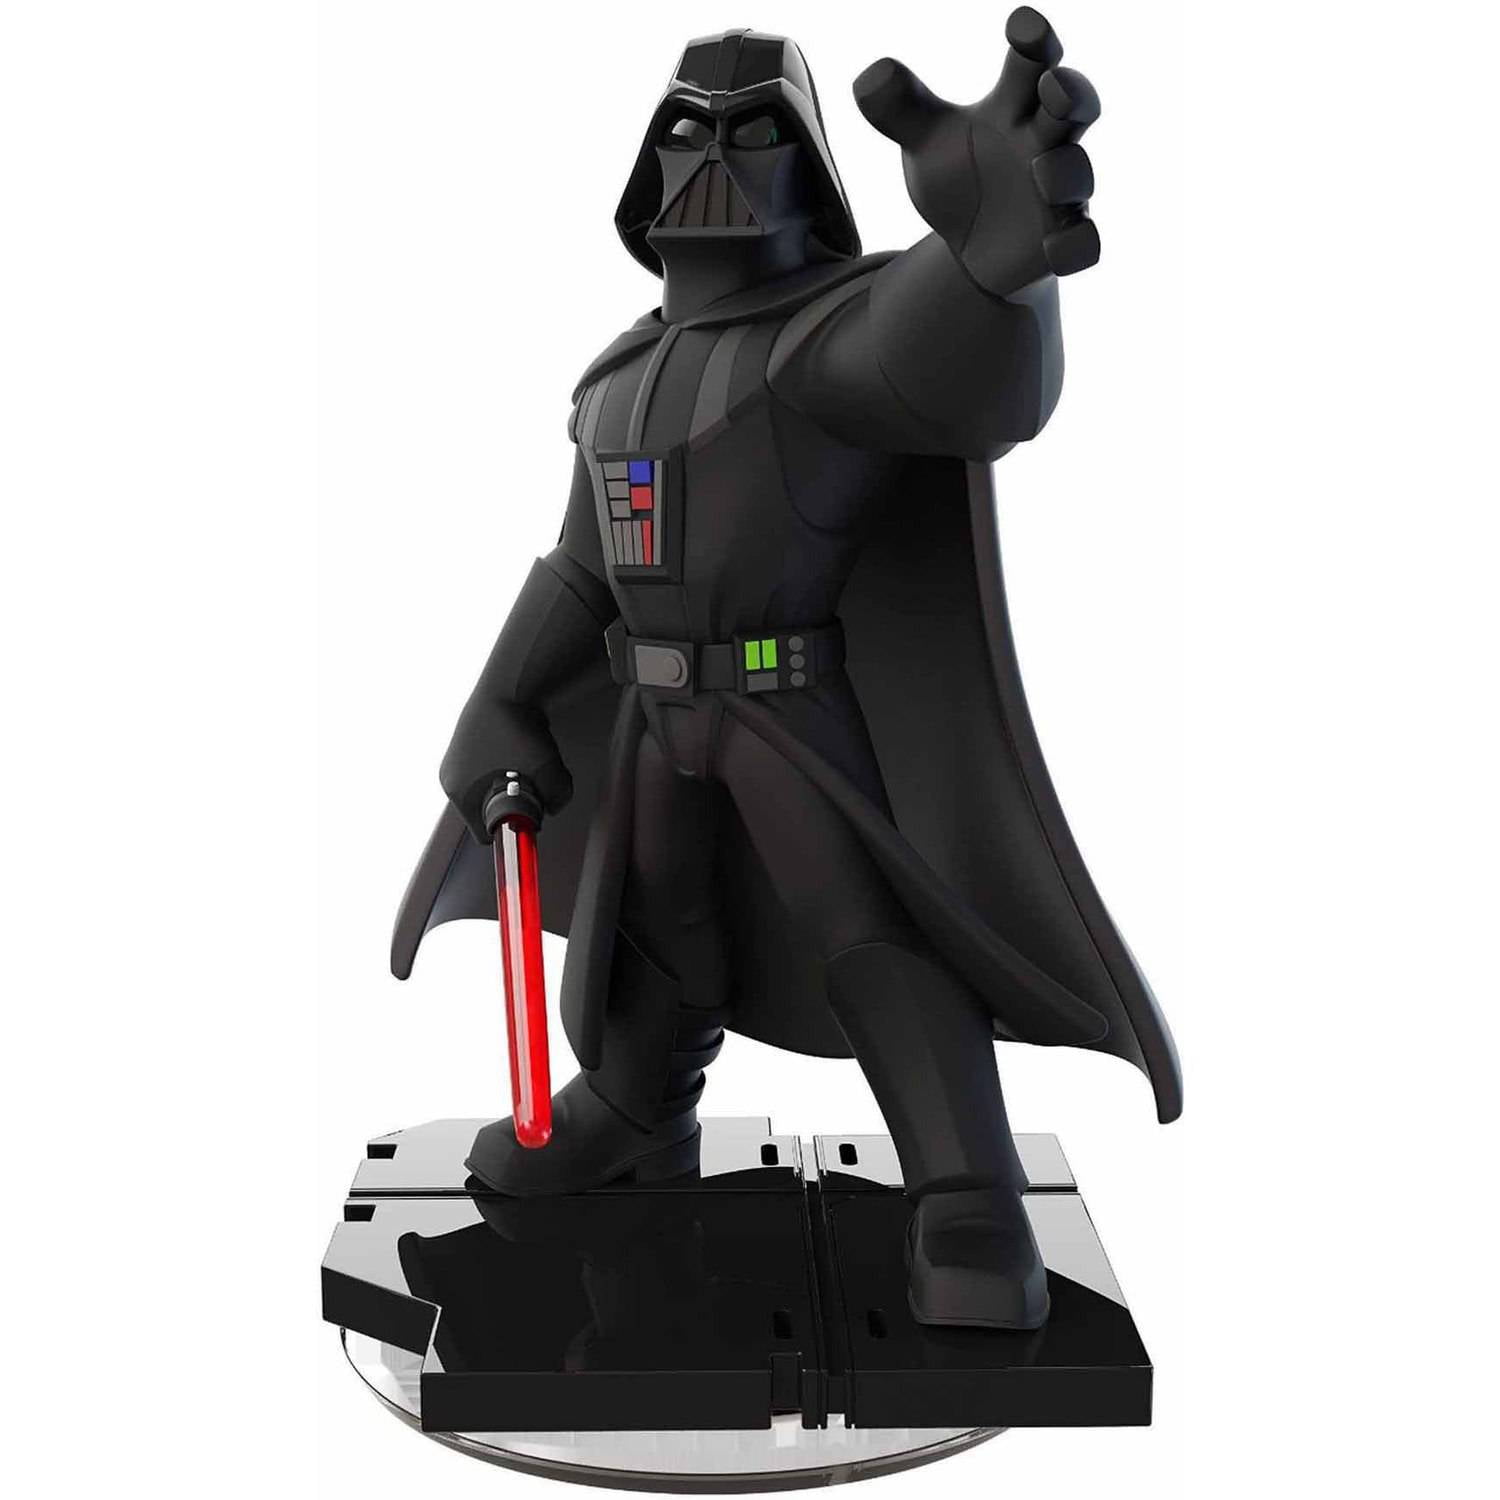 Disney Infinity 3.0 Star Wars Darth Vader Figure (Universal)